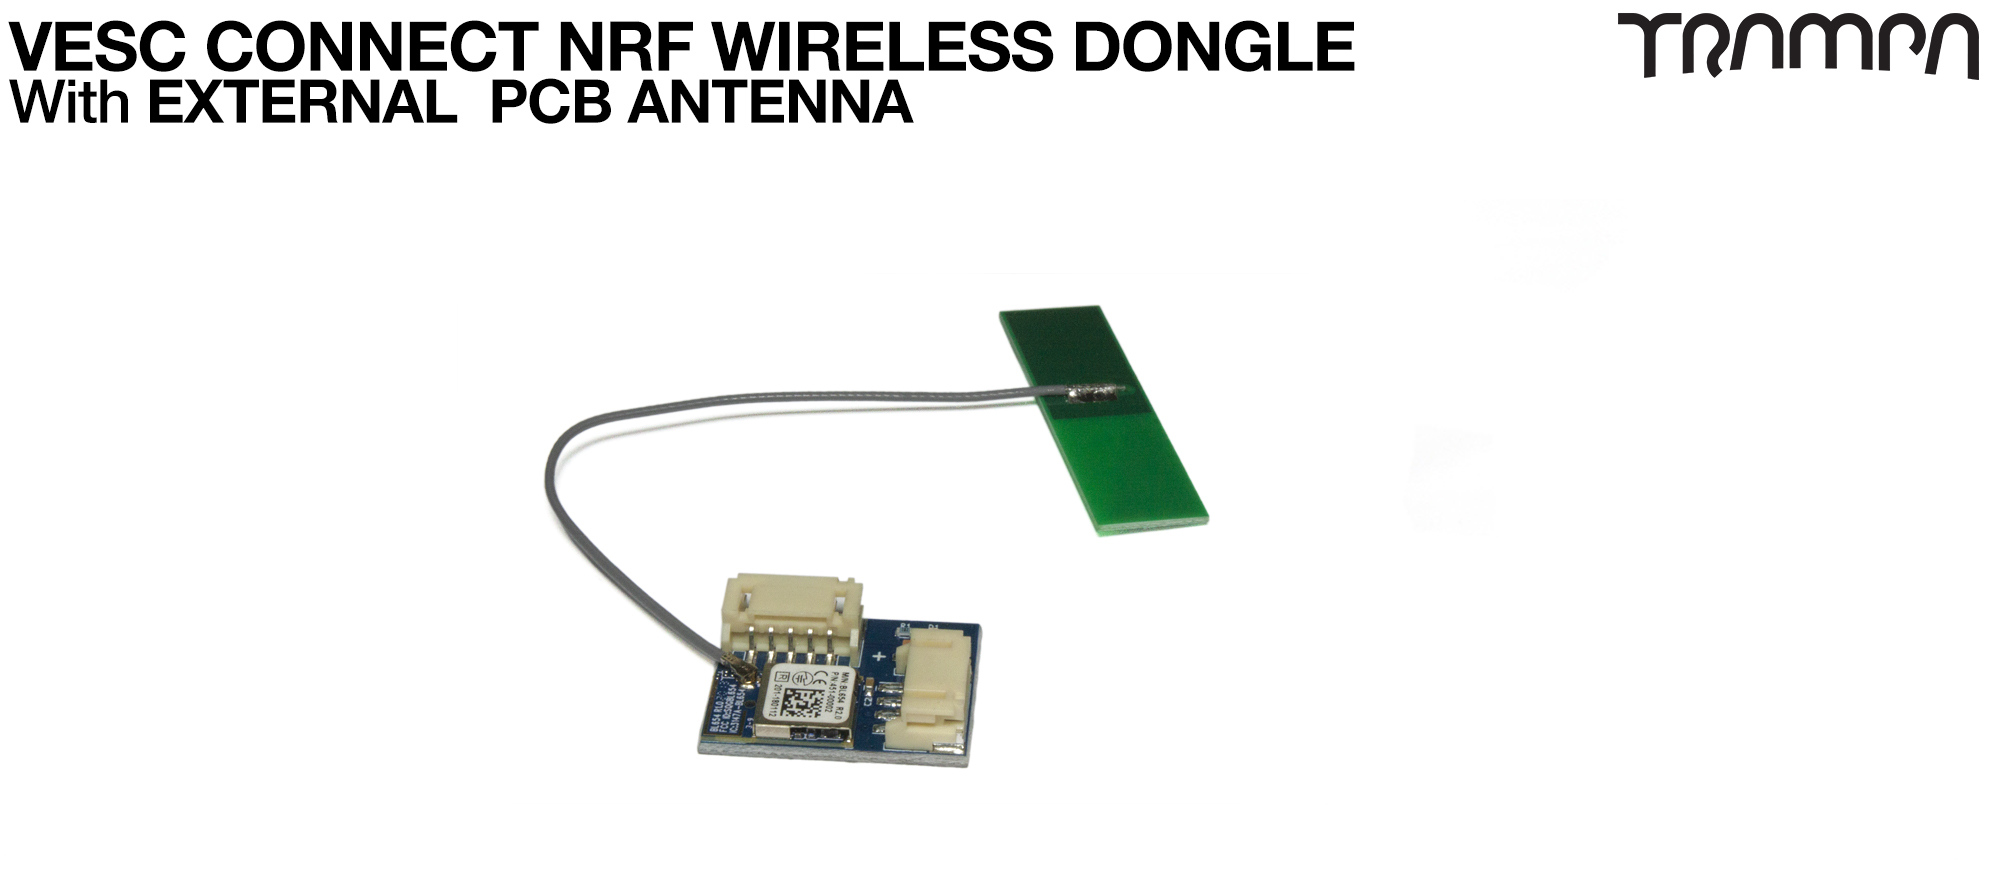 VESC Connect NRF Dongle - EXTERNAL PCB Antenna (+£35)